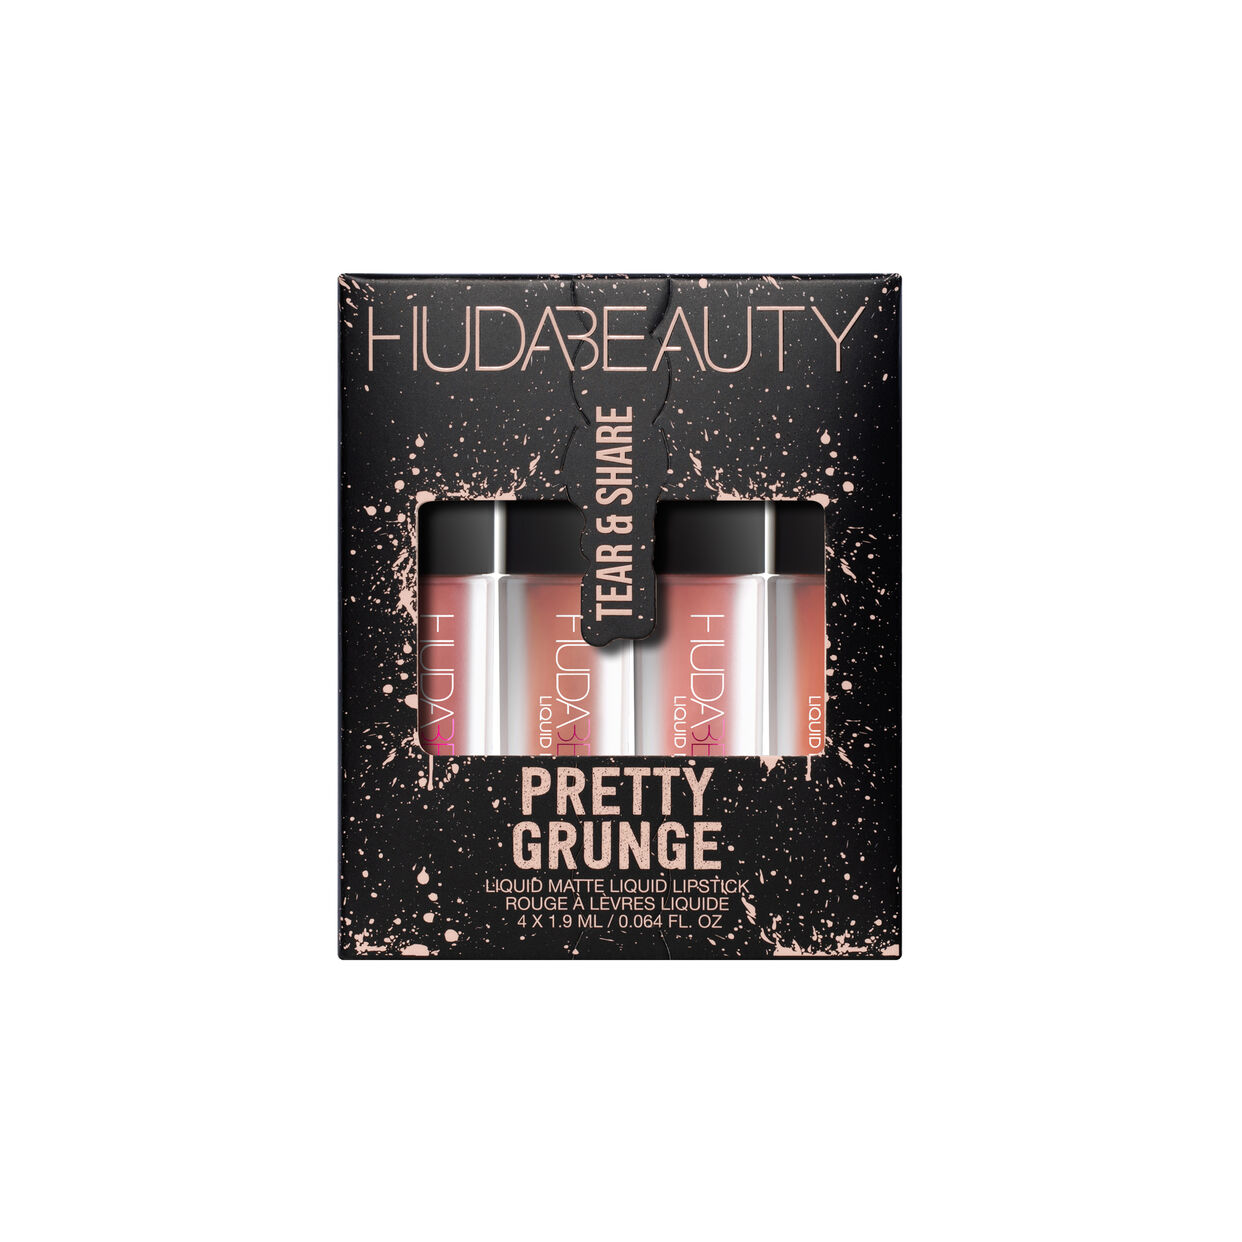 REVIEW: NEW Huda Beauty PRETTY GRUNGE Blush Gloss! 